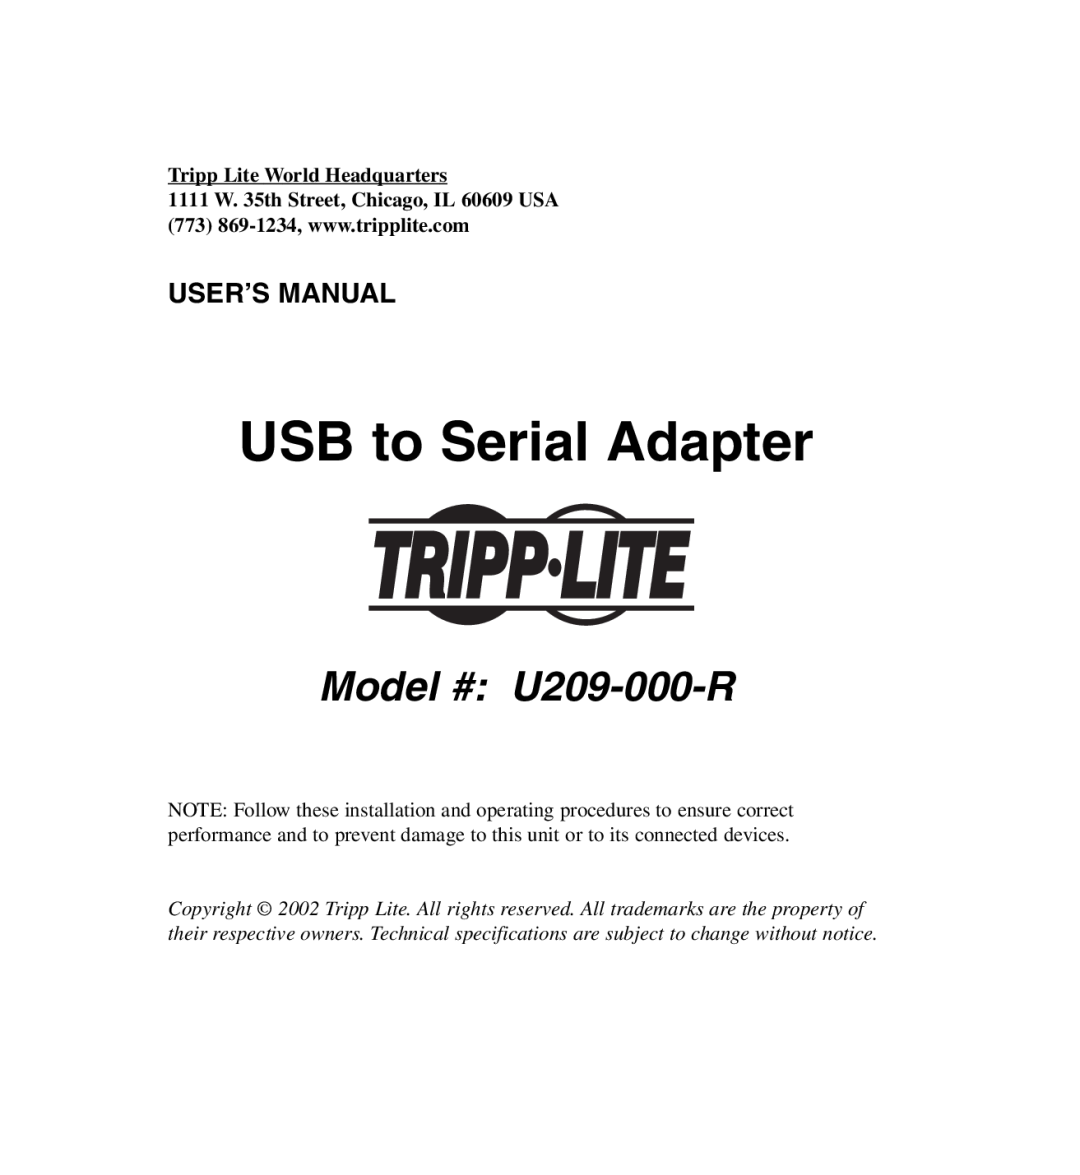 Tripp Lite user manual USB to Serial Adapter, Model # U209-000-R, User’S Manual, Tripp Lite World Headquarters 